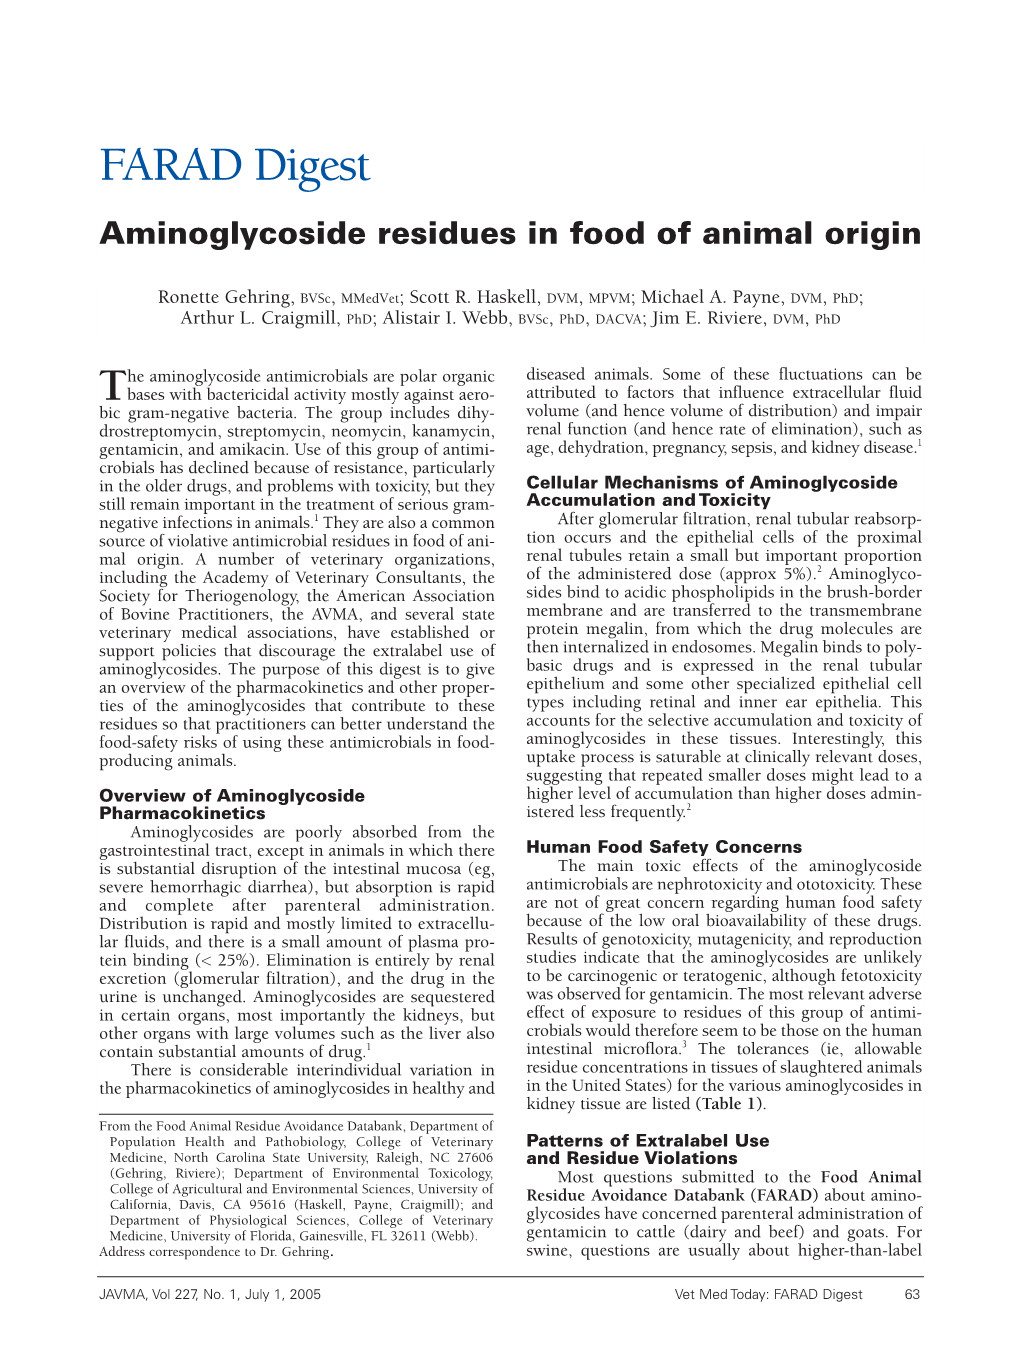 Aminoglycoside Residues in Food of Animal Origin